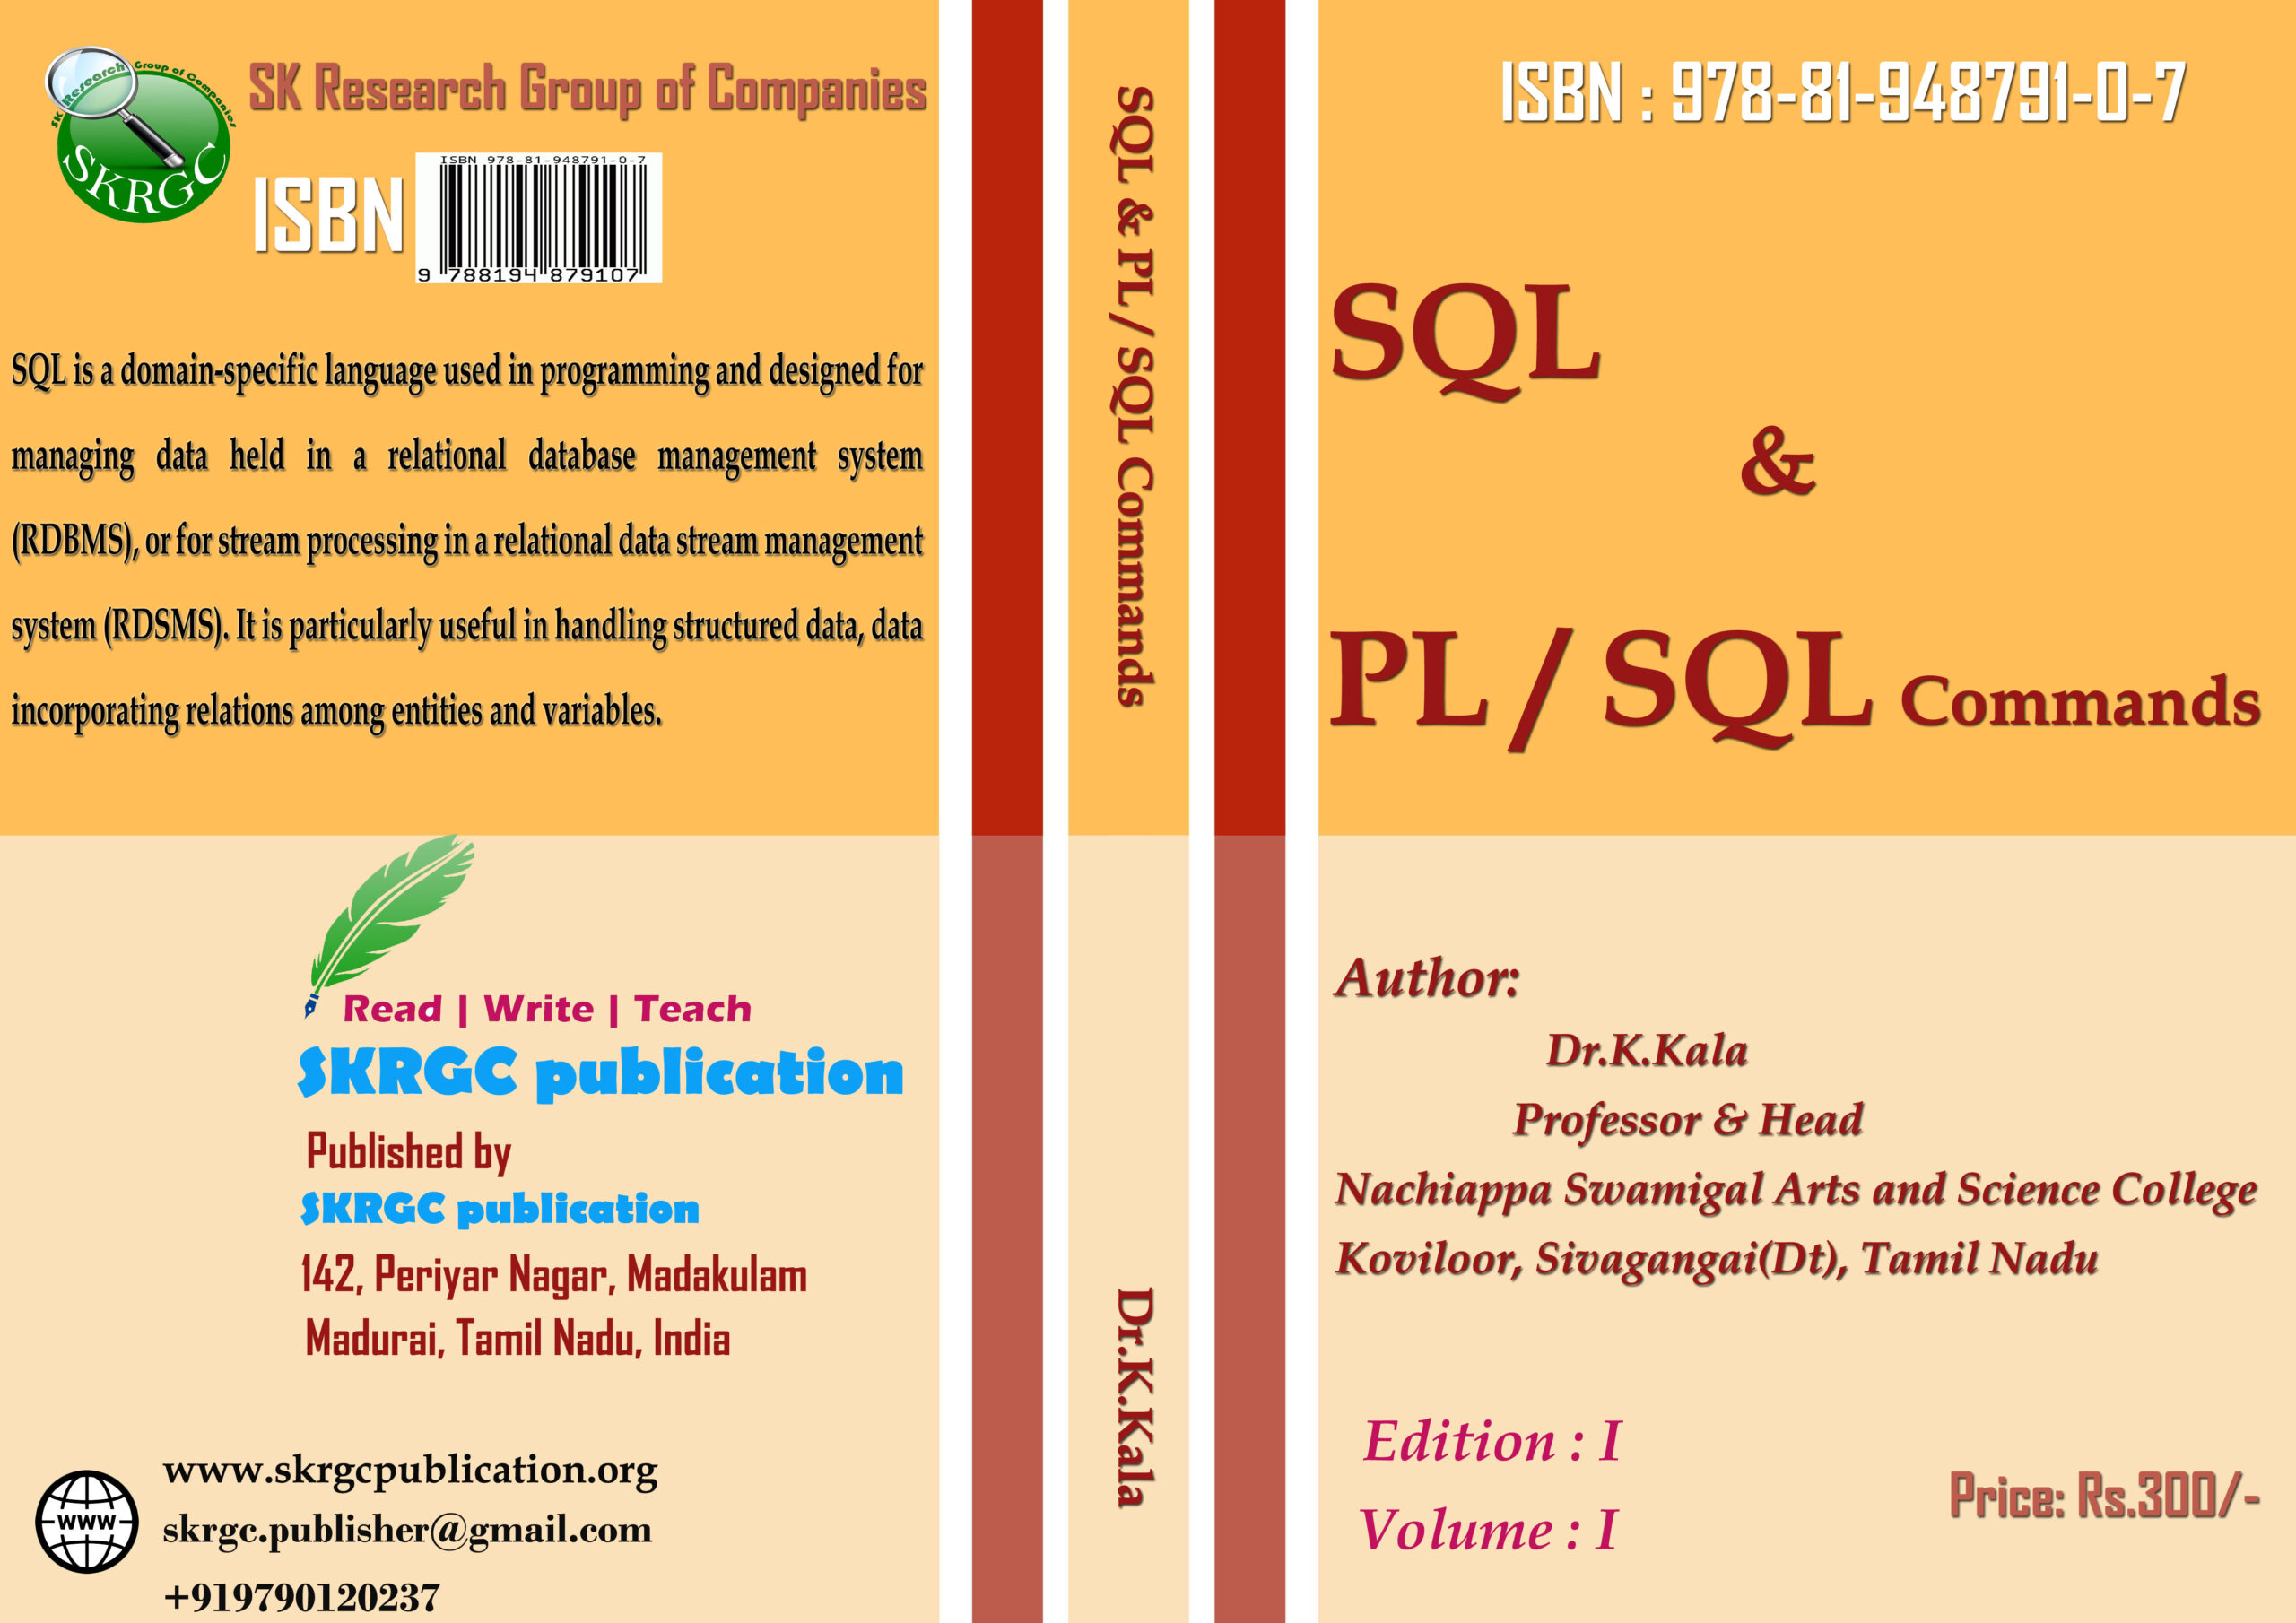 SQL & PL/SQL Commands